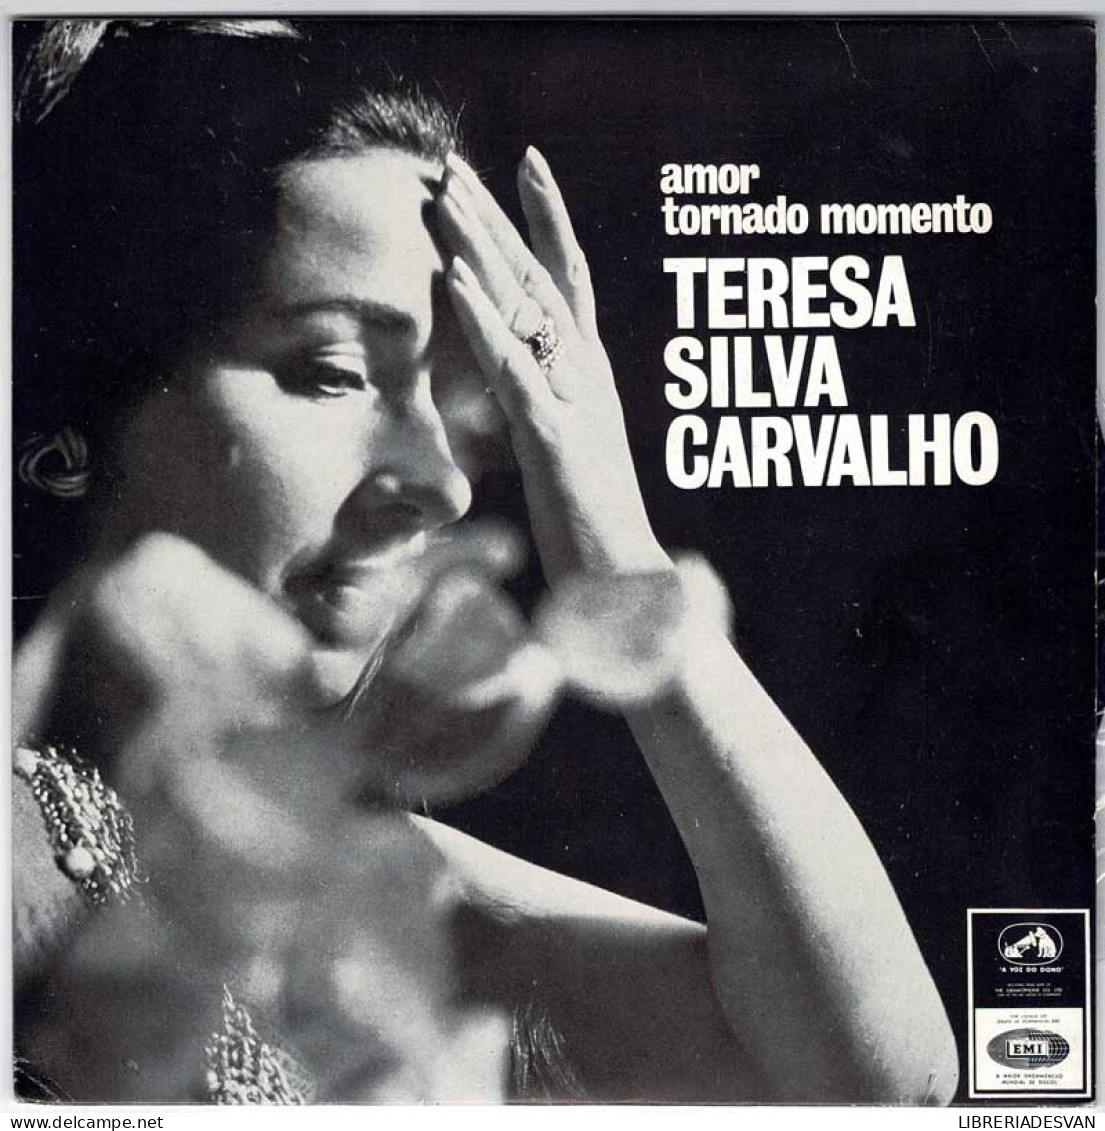 Teresa Silva Carvalho - Amor Tornado Momento. Amar. Frustraçao. Fadista Louco. EP - Unclassified